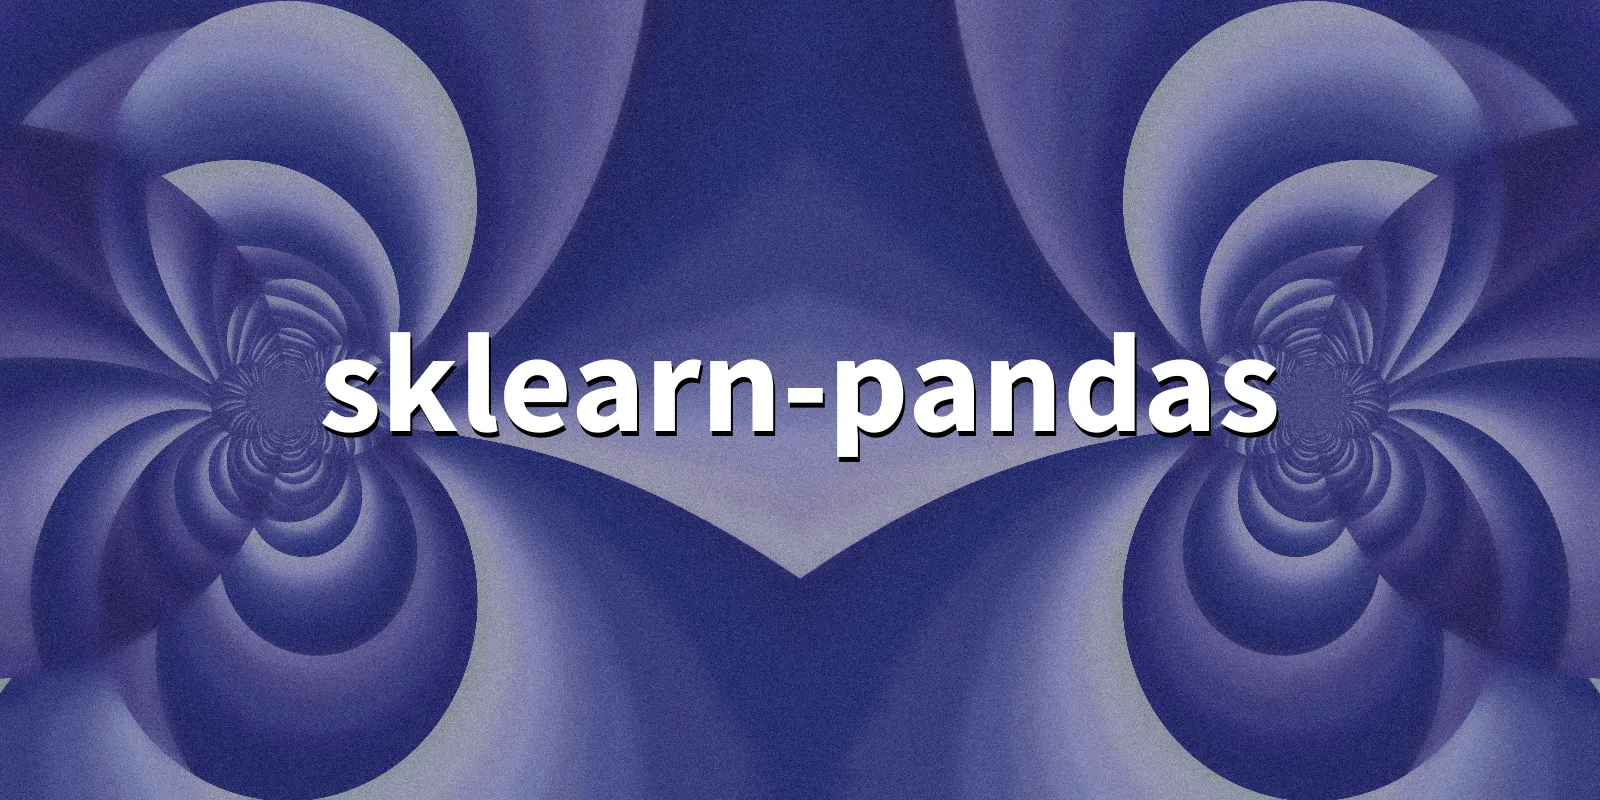 /pkg/s/sklearn-pandas/sklearn-pandas-banner.webp